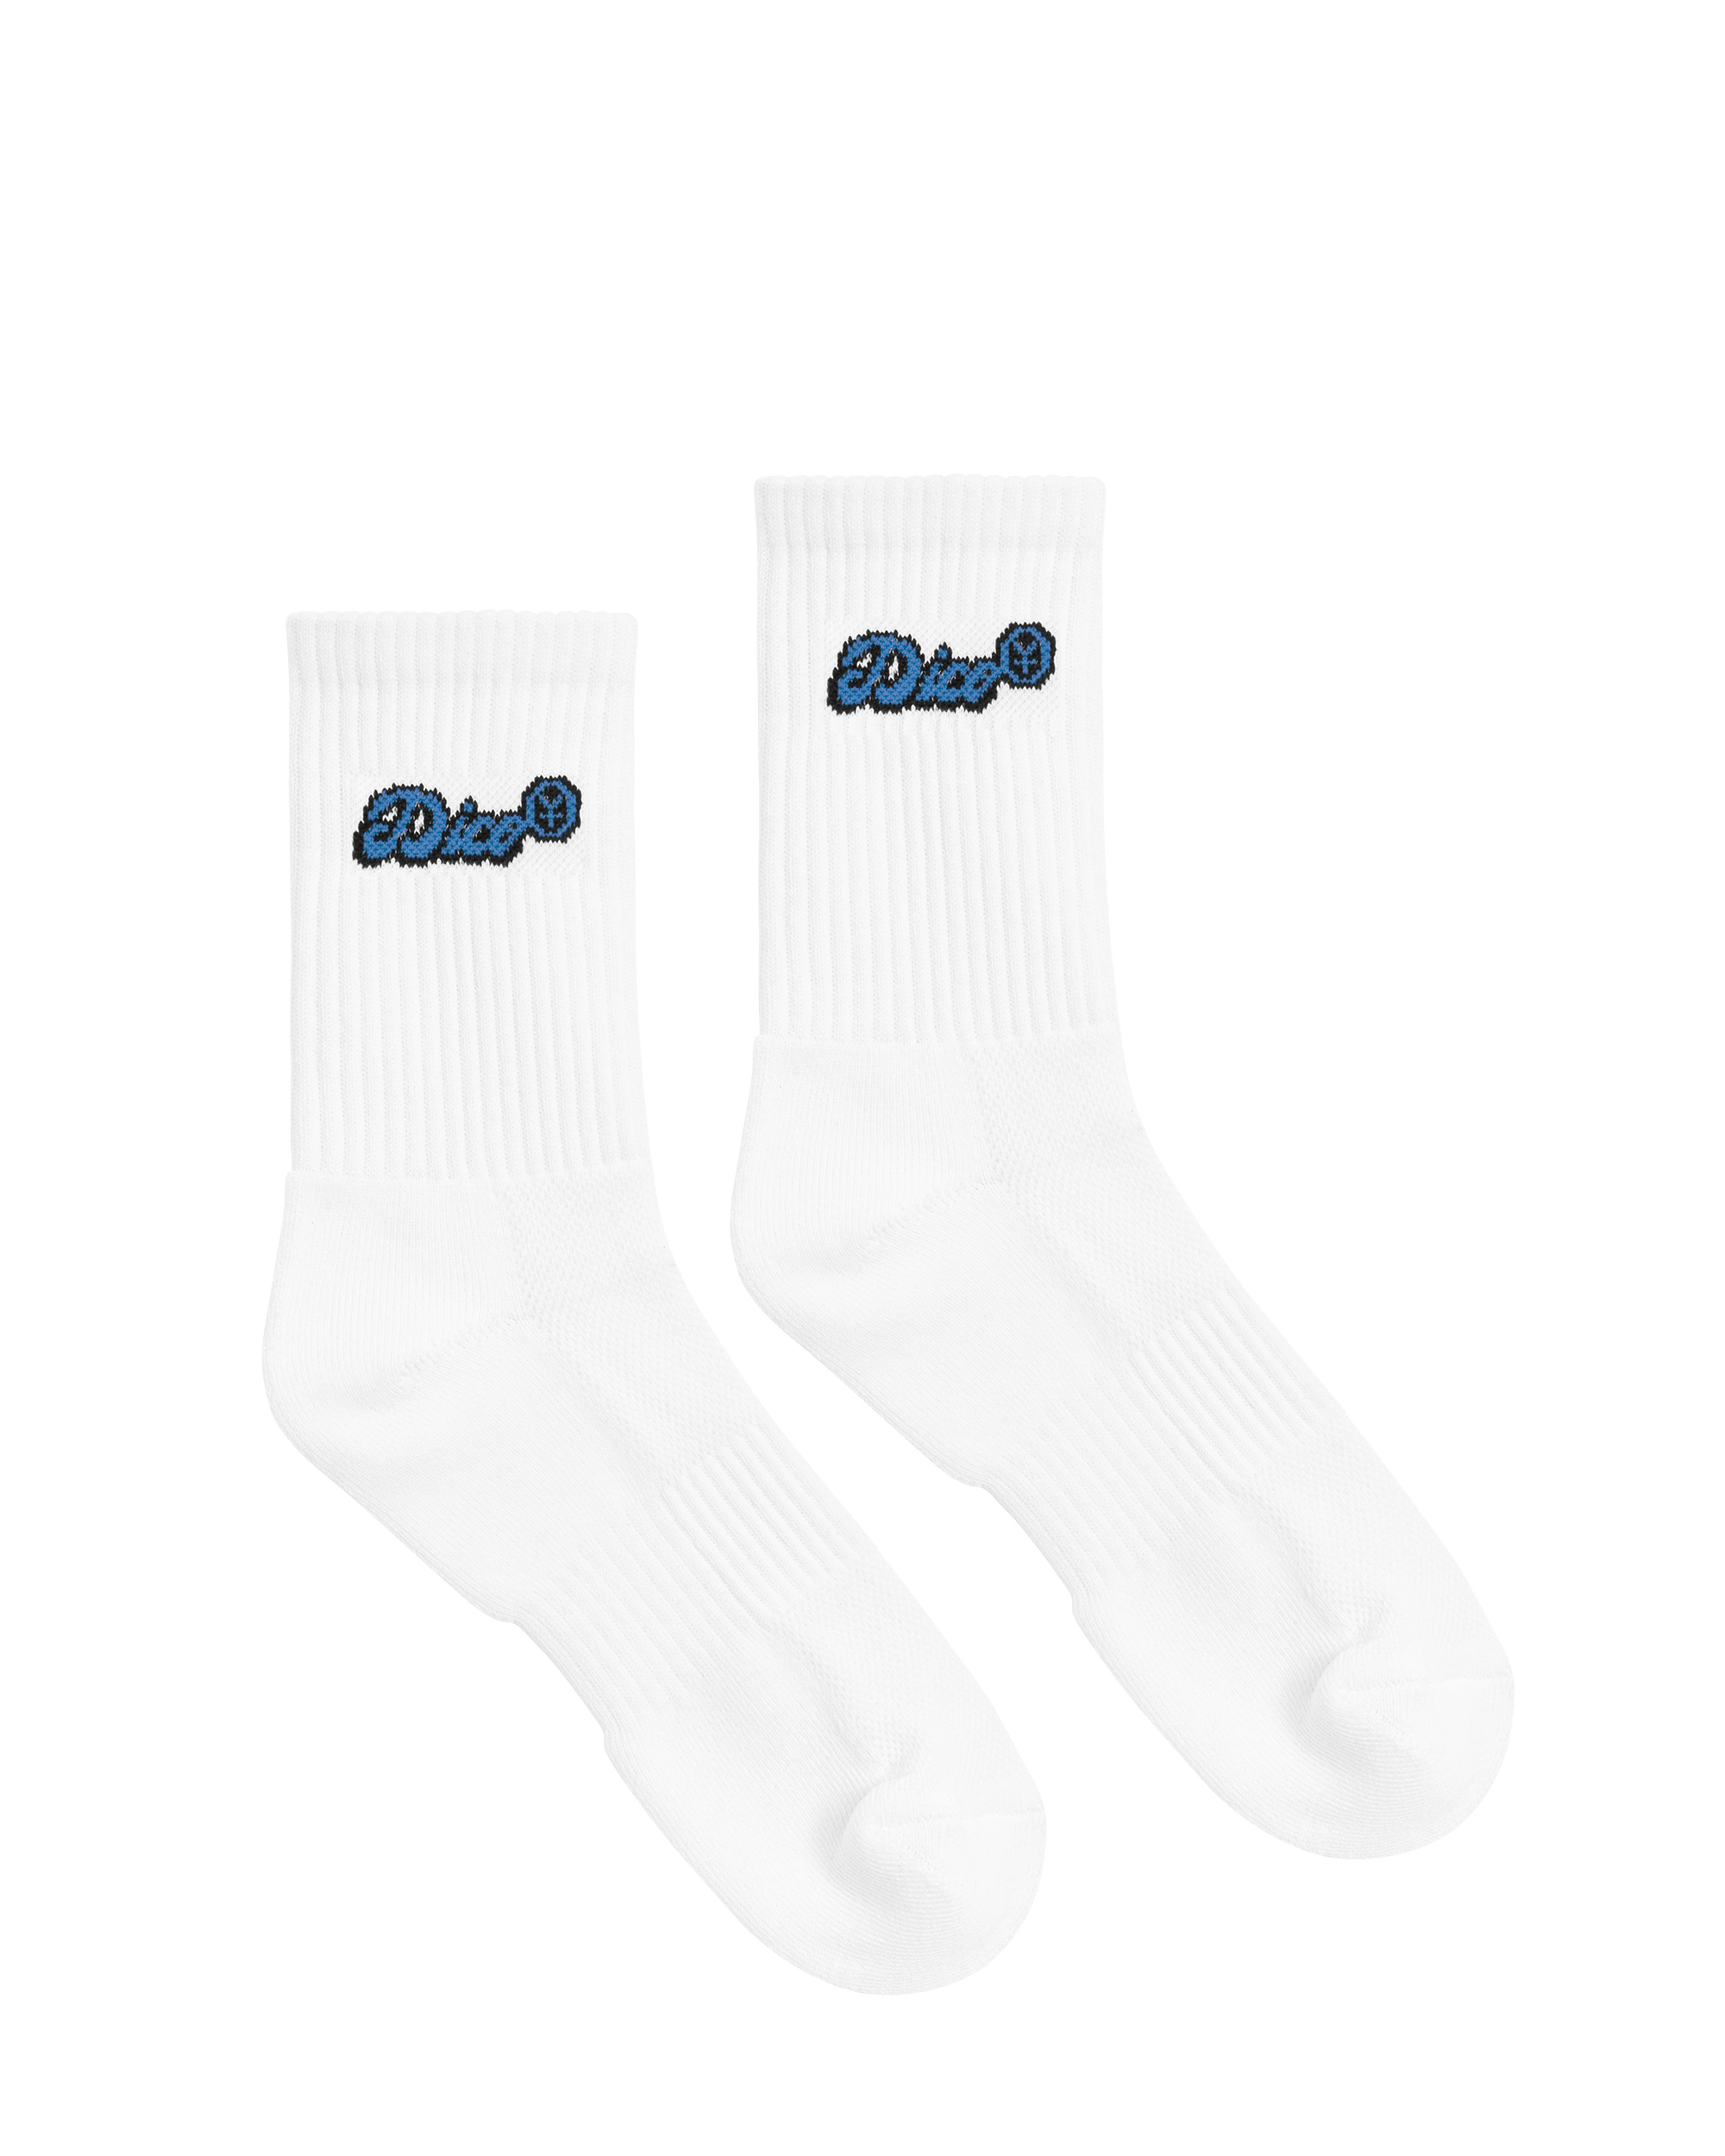 Dico Comfy Socks - Blue/White - Pack of 3